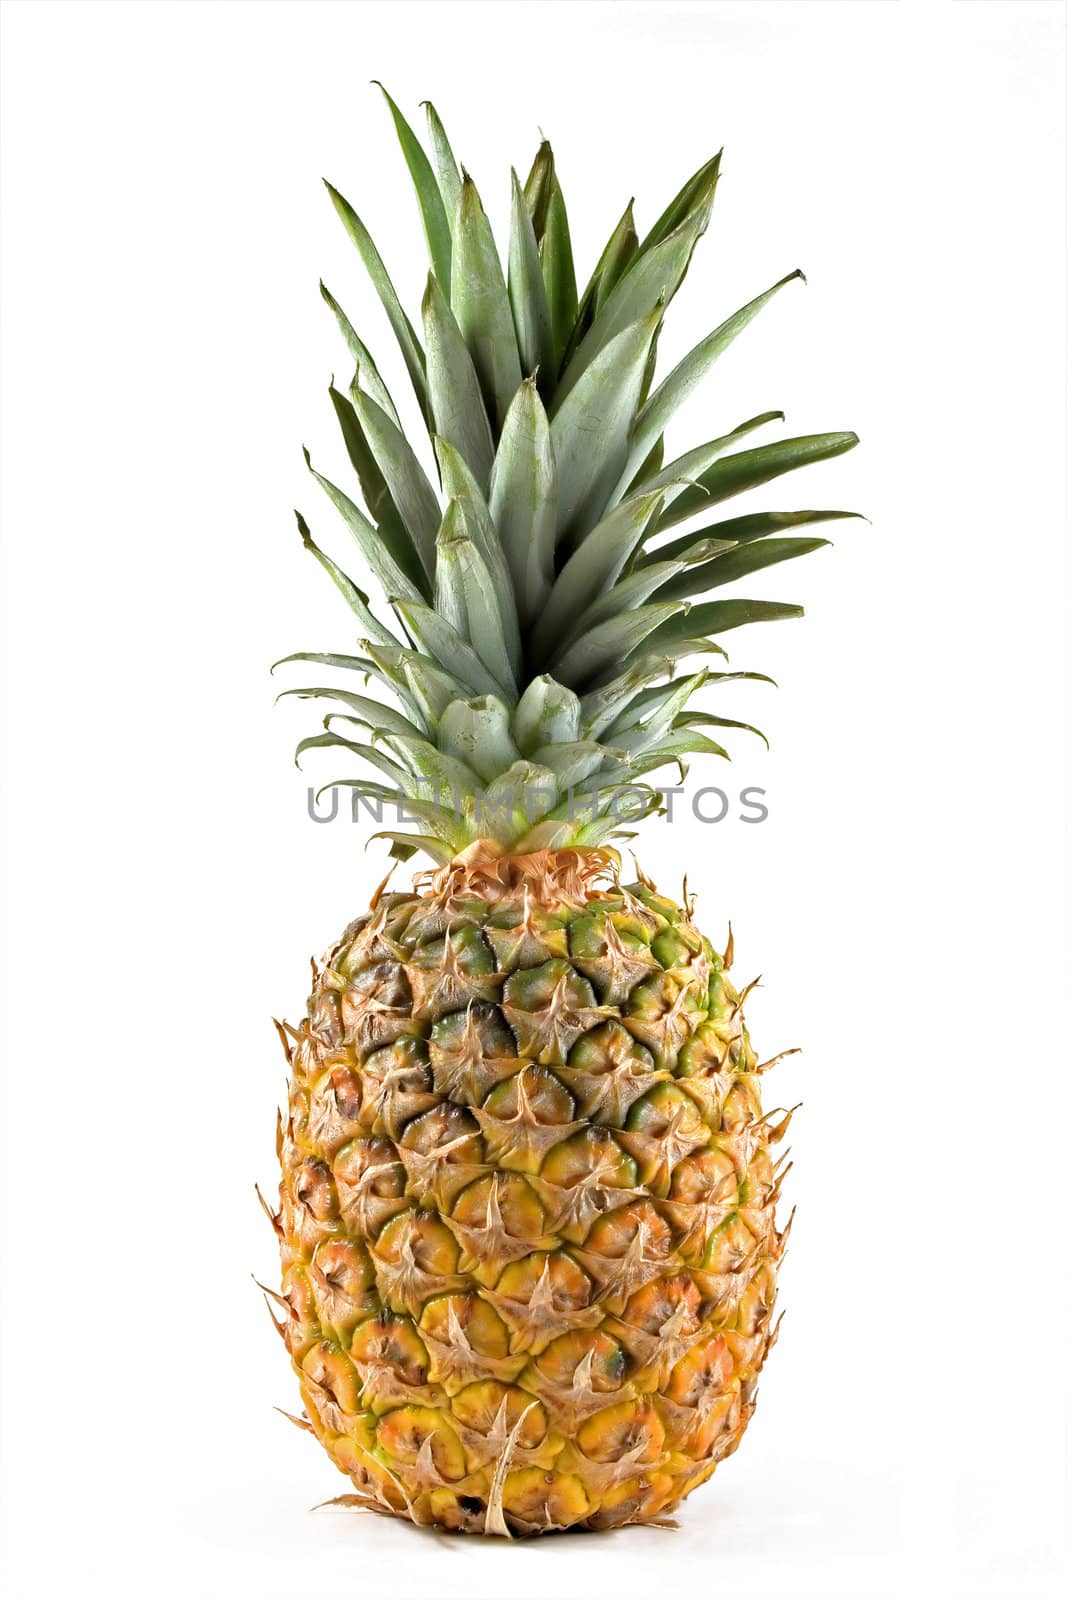 Pineapple by PauloResende